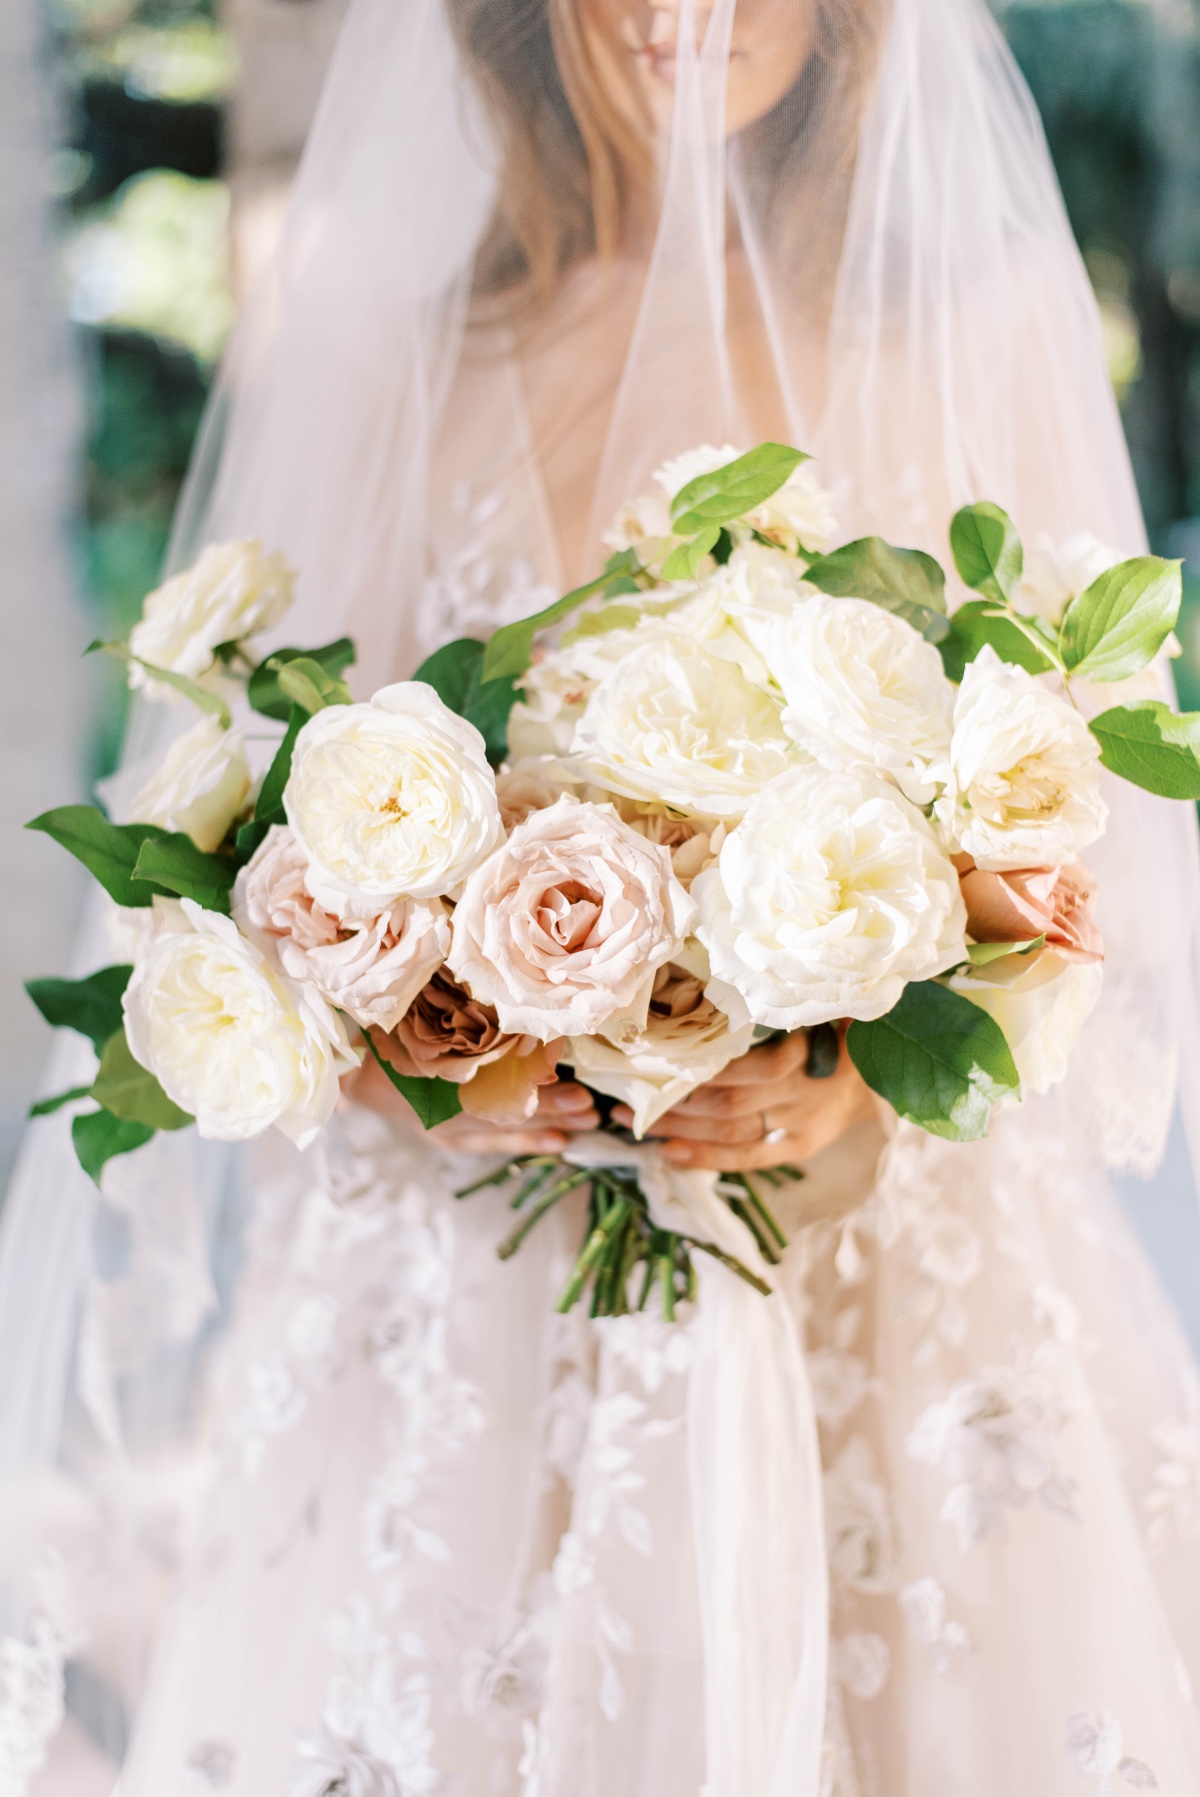 rose wedding bouquet